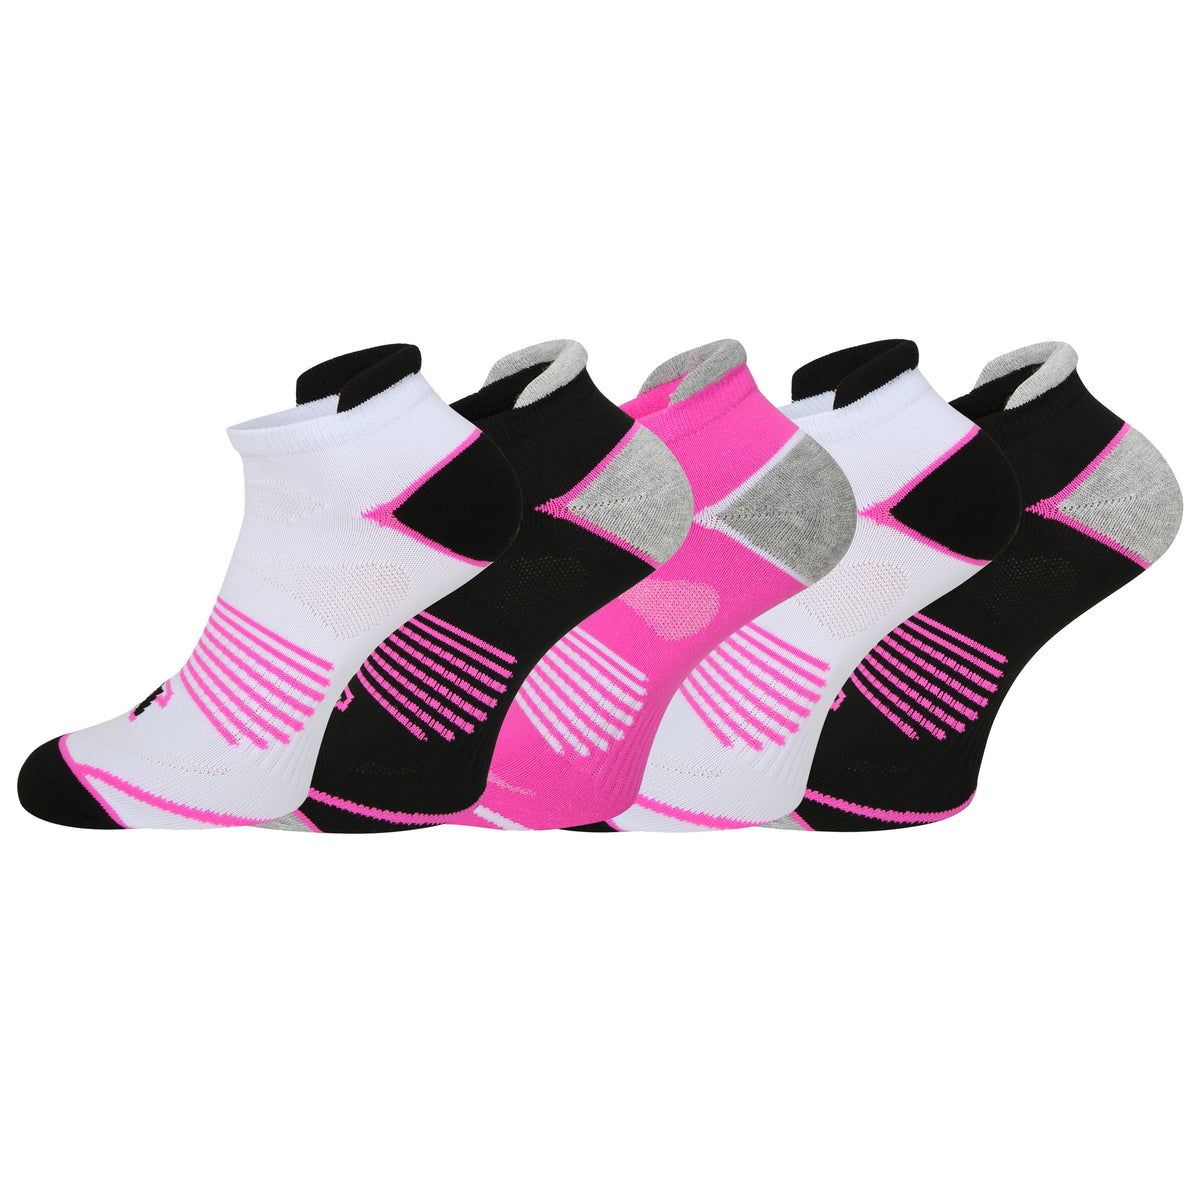 Ladies 5 Pack Trainer Liner Socks Assorted